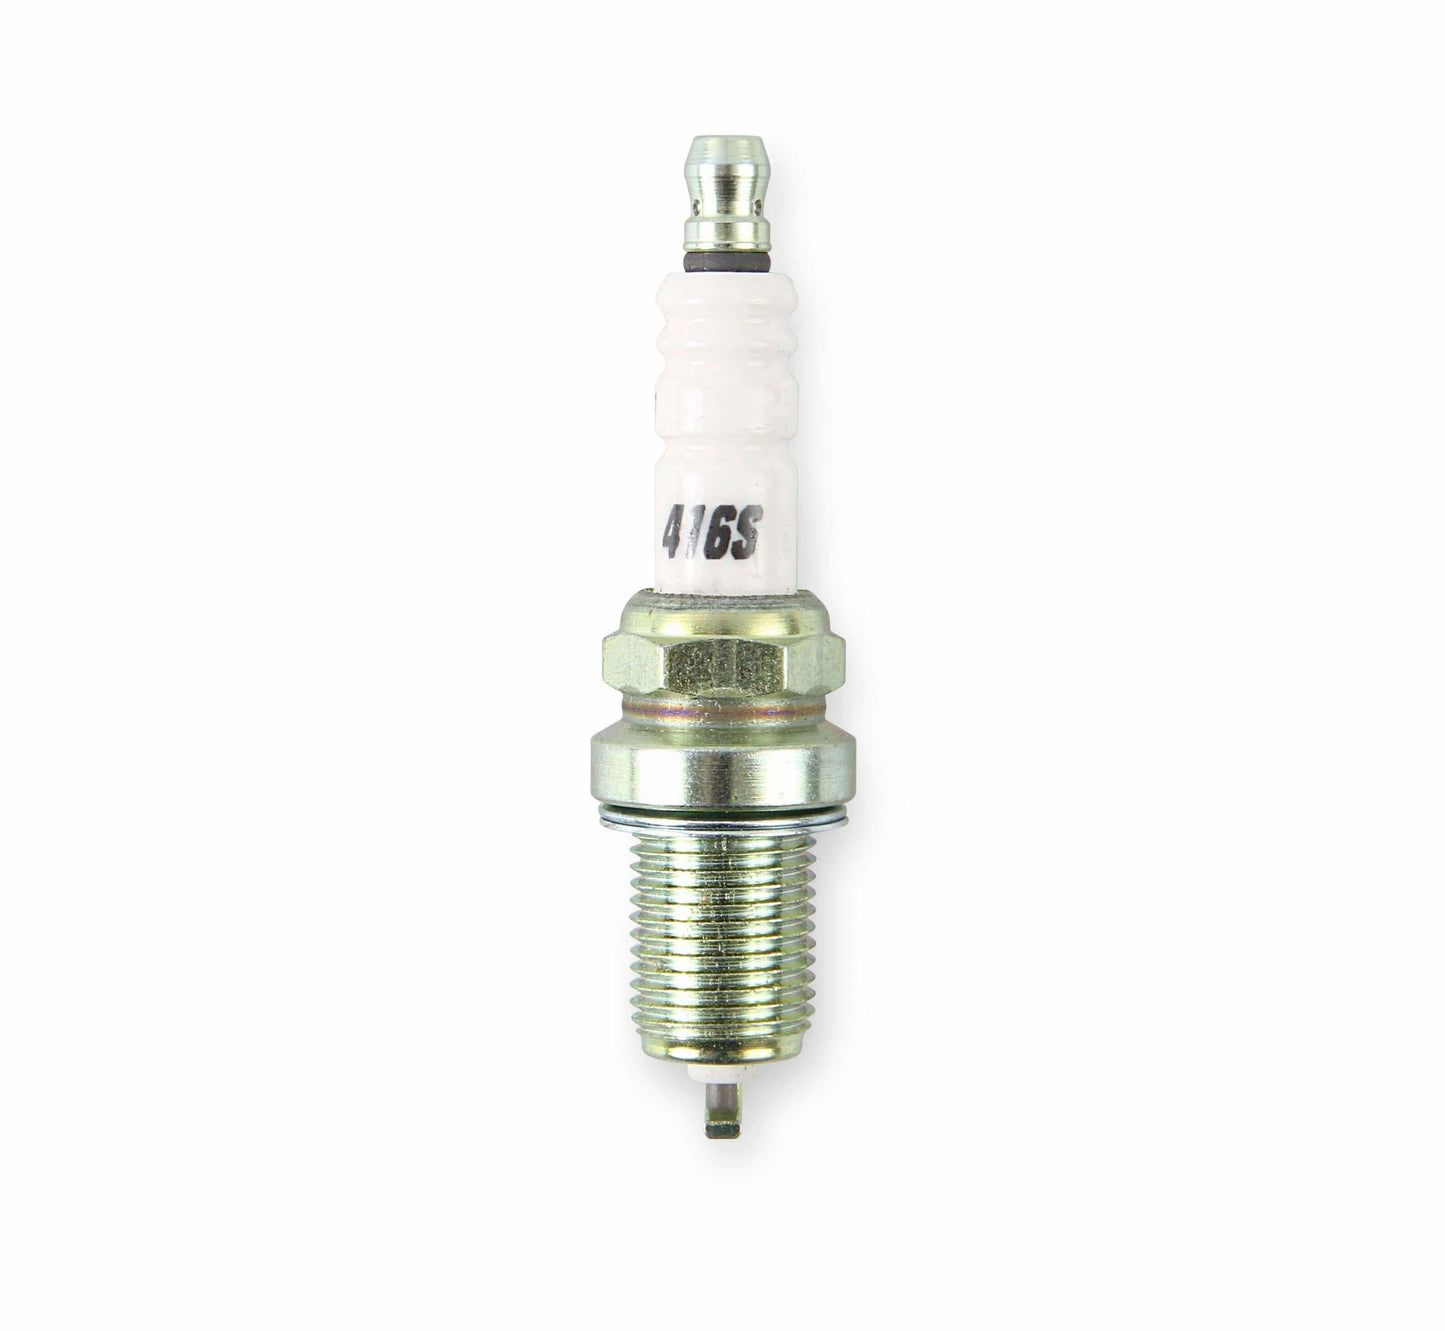 HP Copper Spark Plug - Shorty - 0416S-4